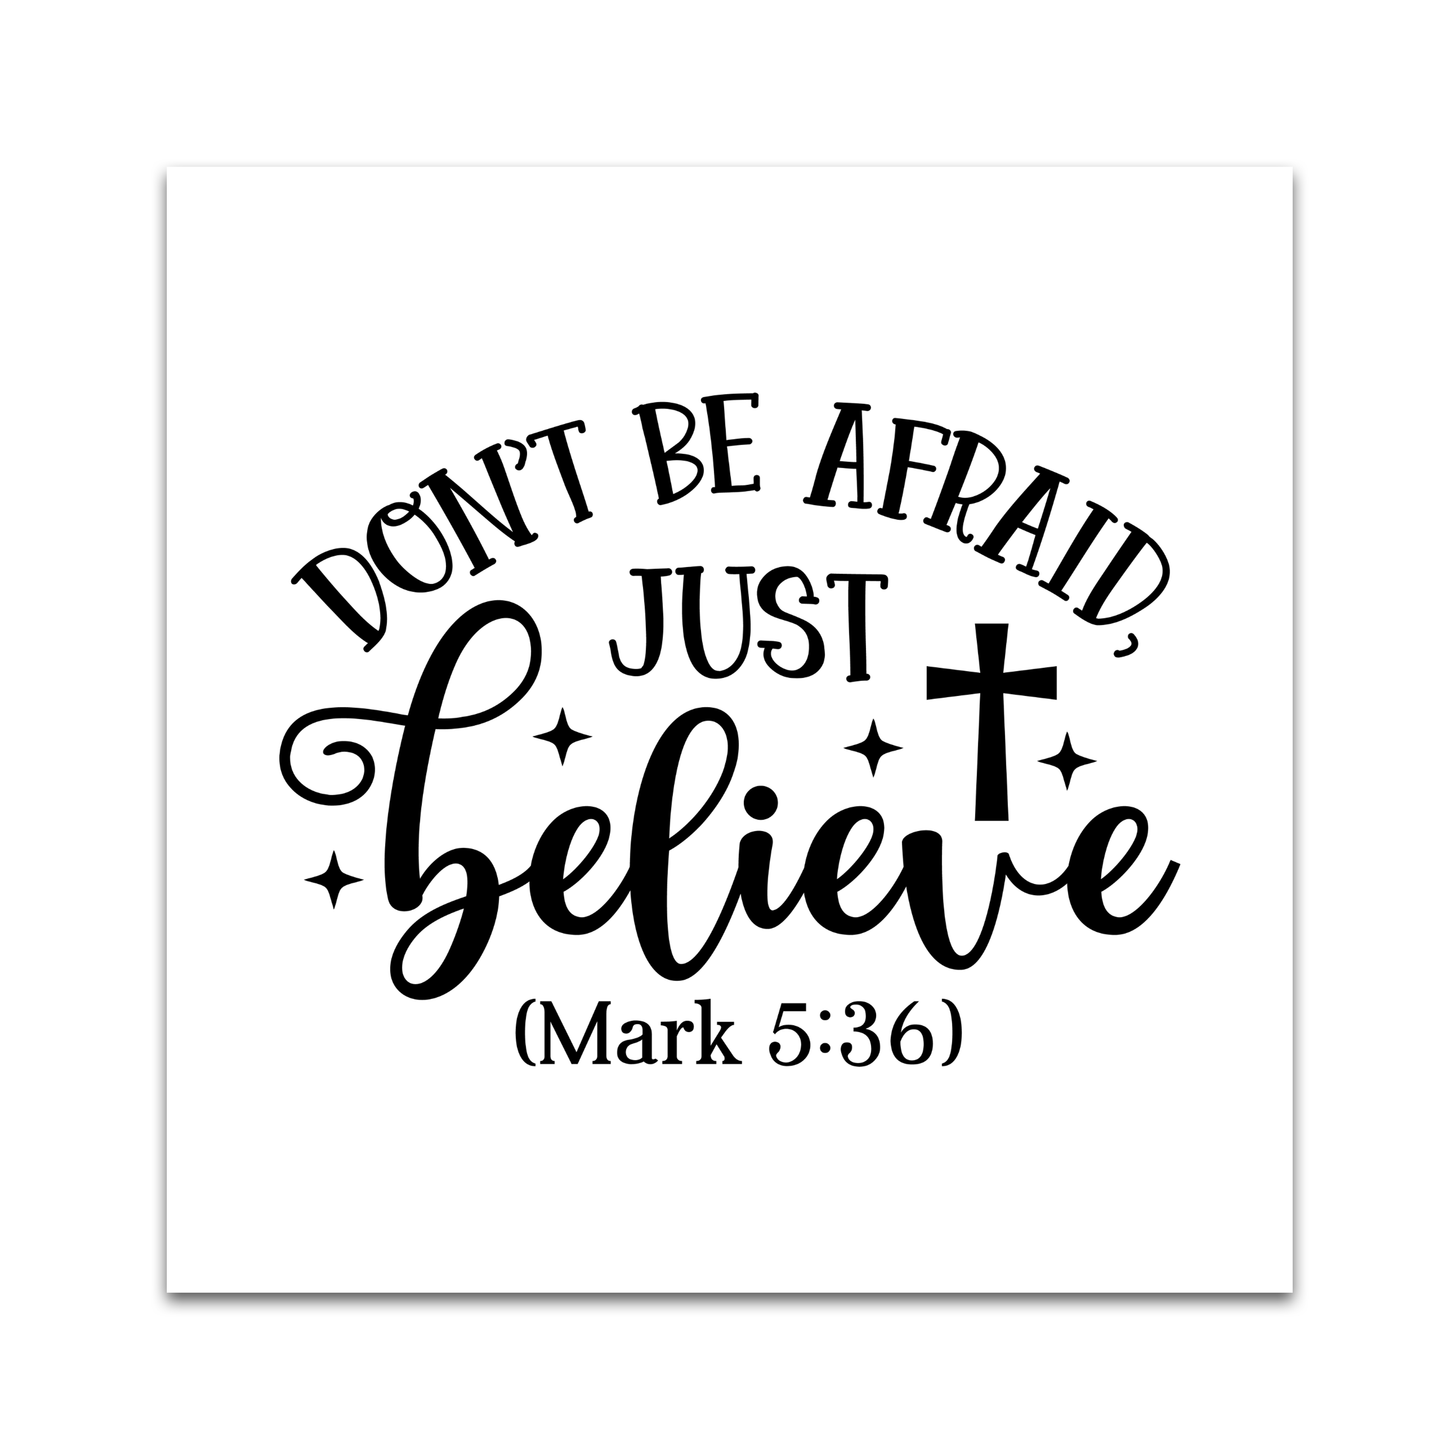 Precut Bible Quilt Square - Don't Be Afraid, Just Believe, Mark 5:36